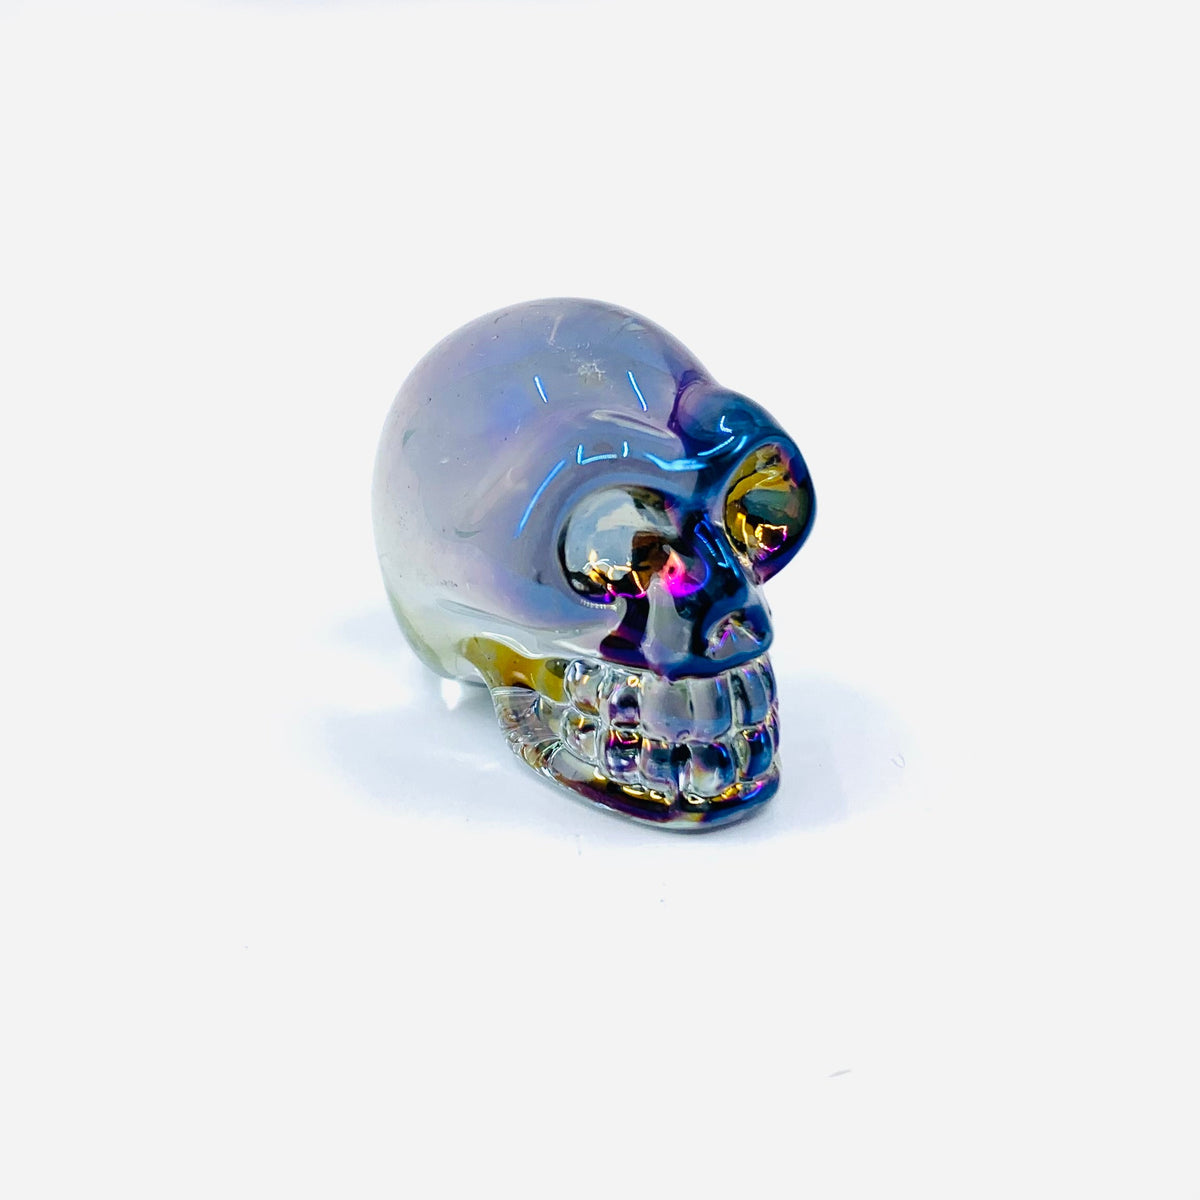 Colorful Glass Skulls Manufactured Overseas Oil Slick 